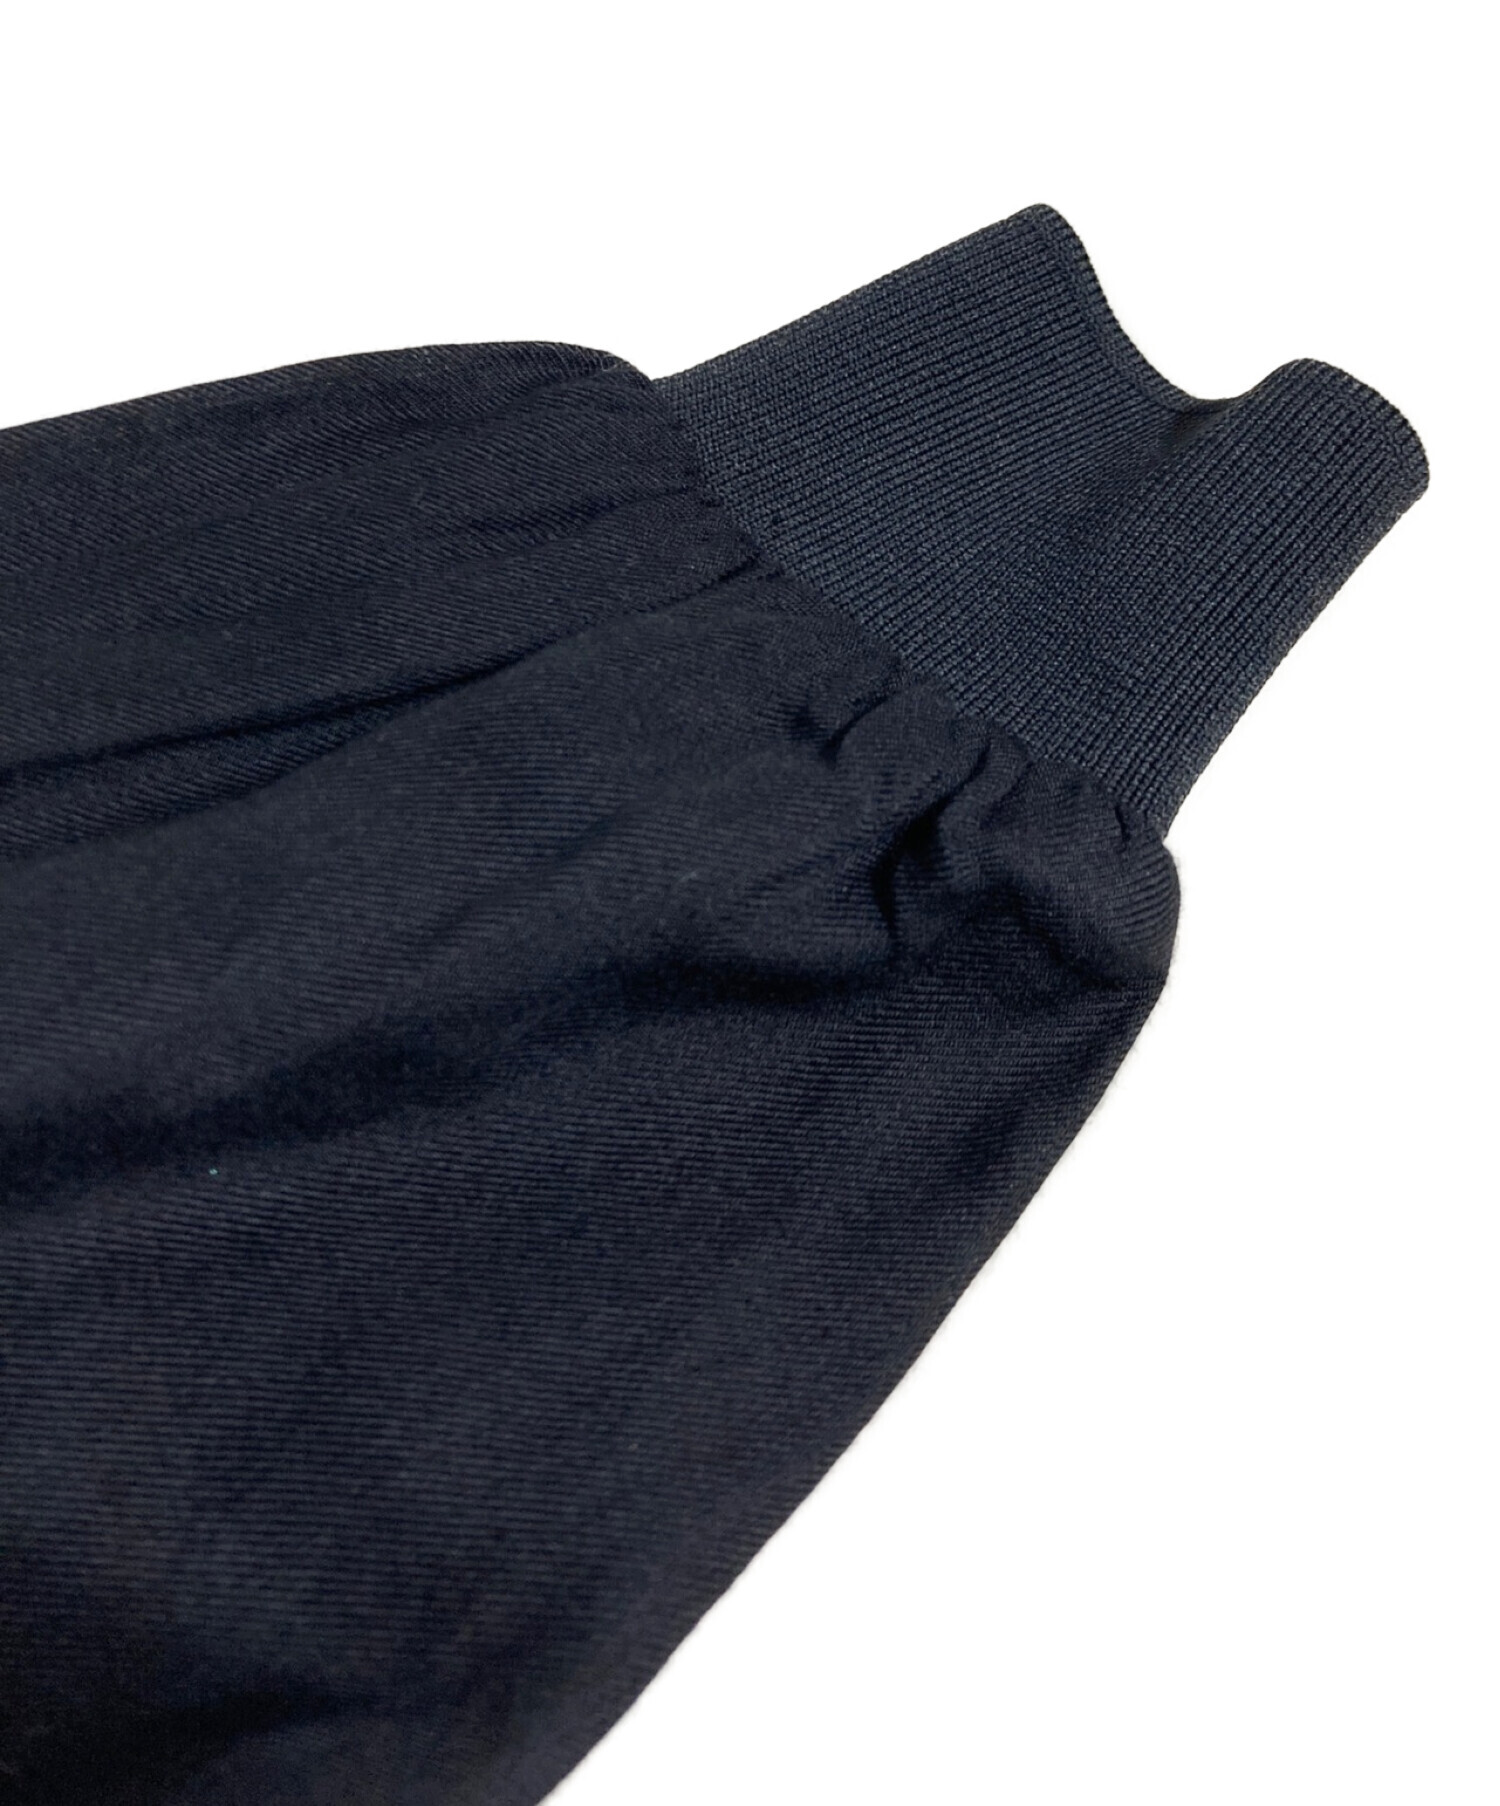 DIESEL (ディーゼル) D Super D Short Dress シャツ ワンピース ブラック サイズ:XS